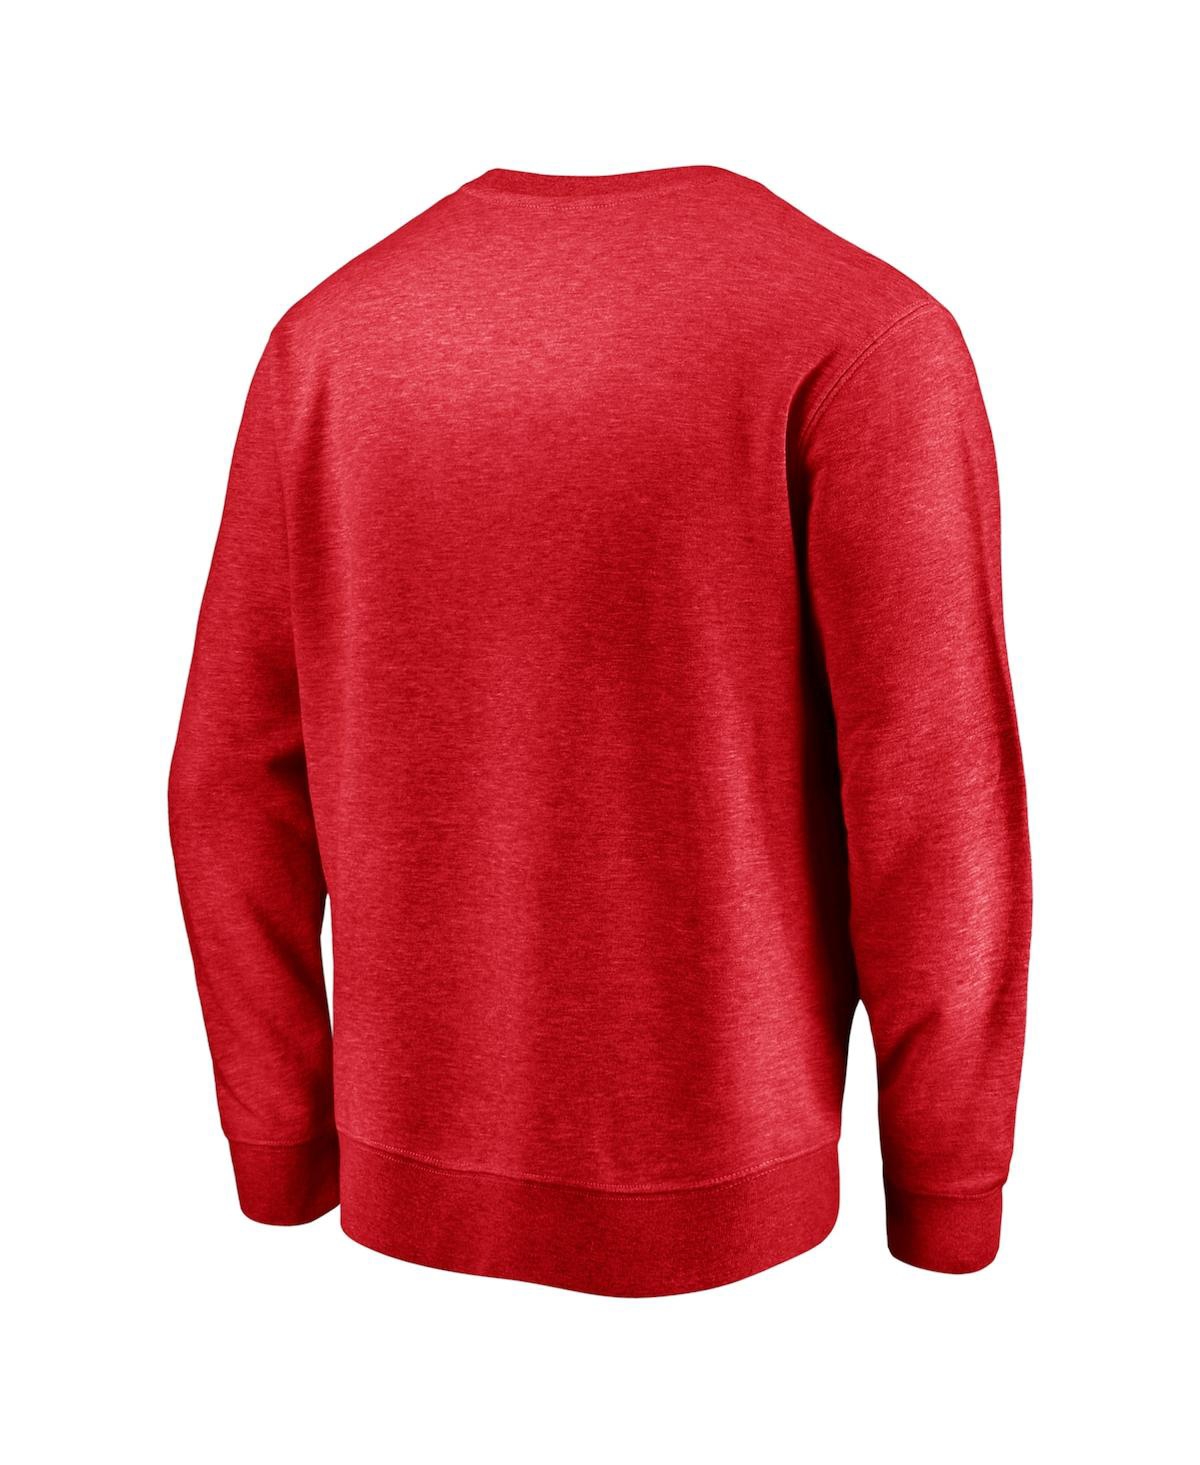 Shop Fanatics Men's  Red La Clippers Game Time Arch Pullover Sweatshirt